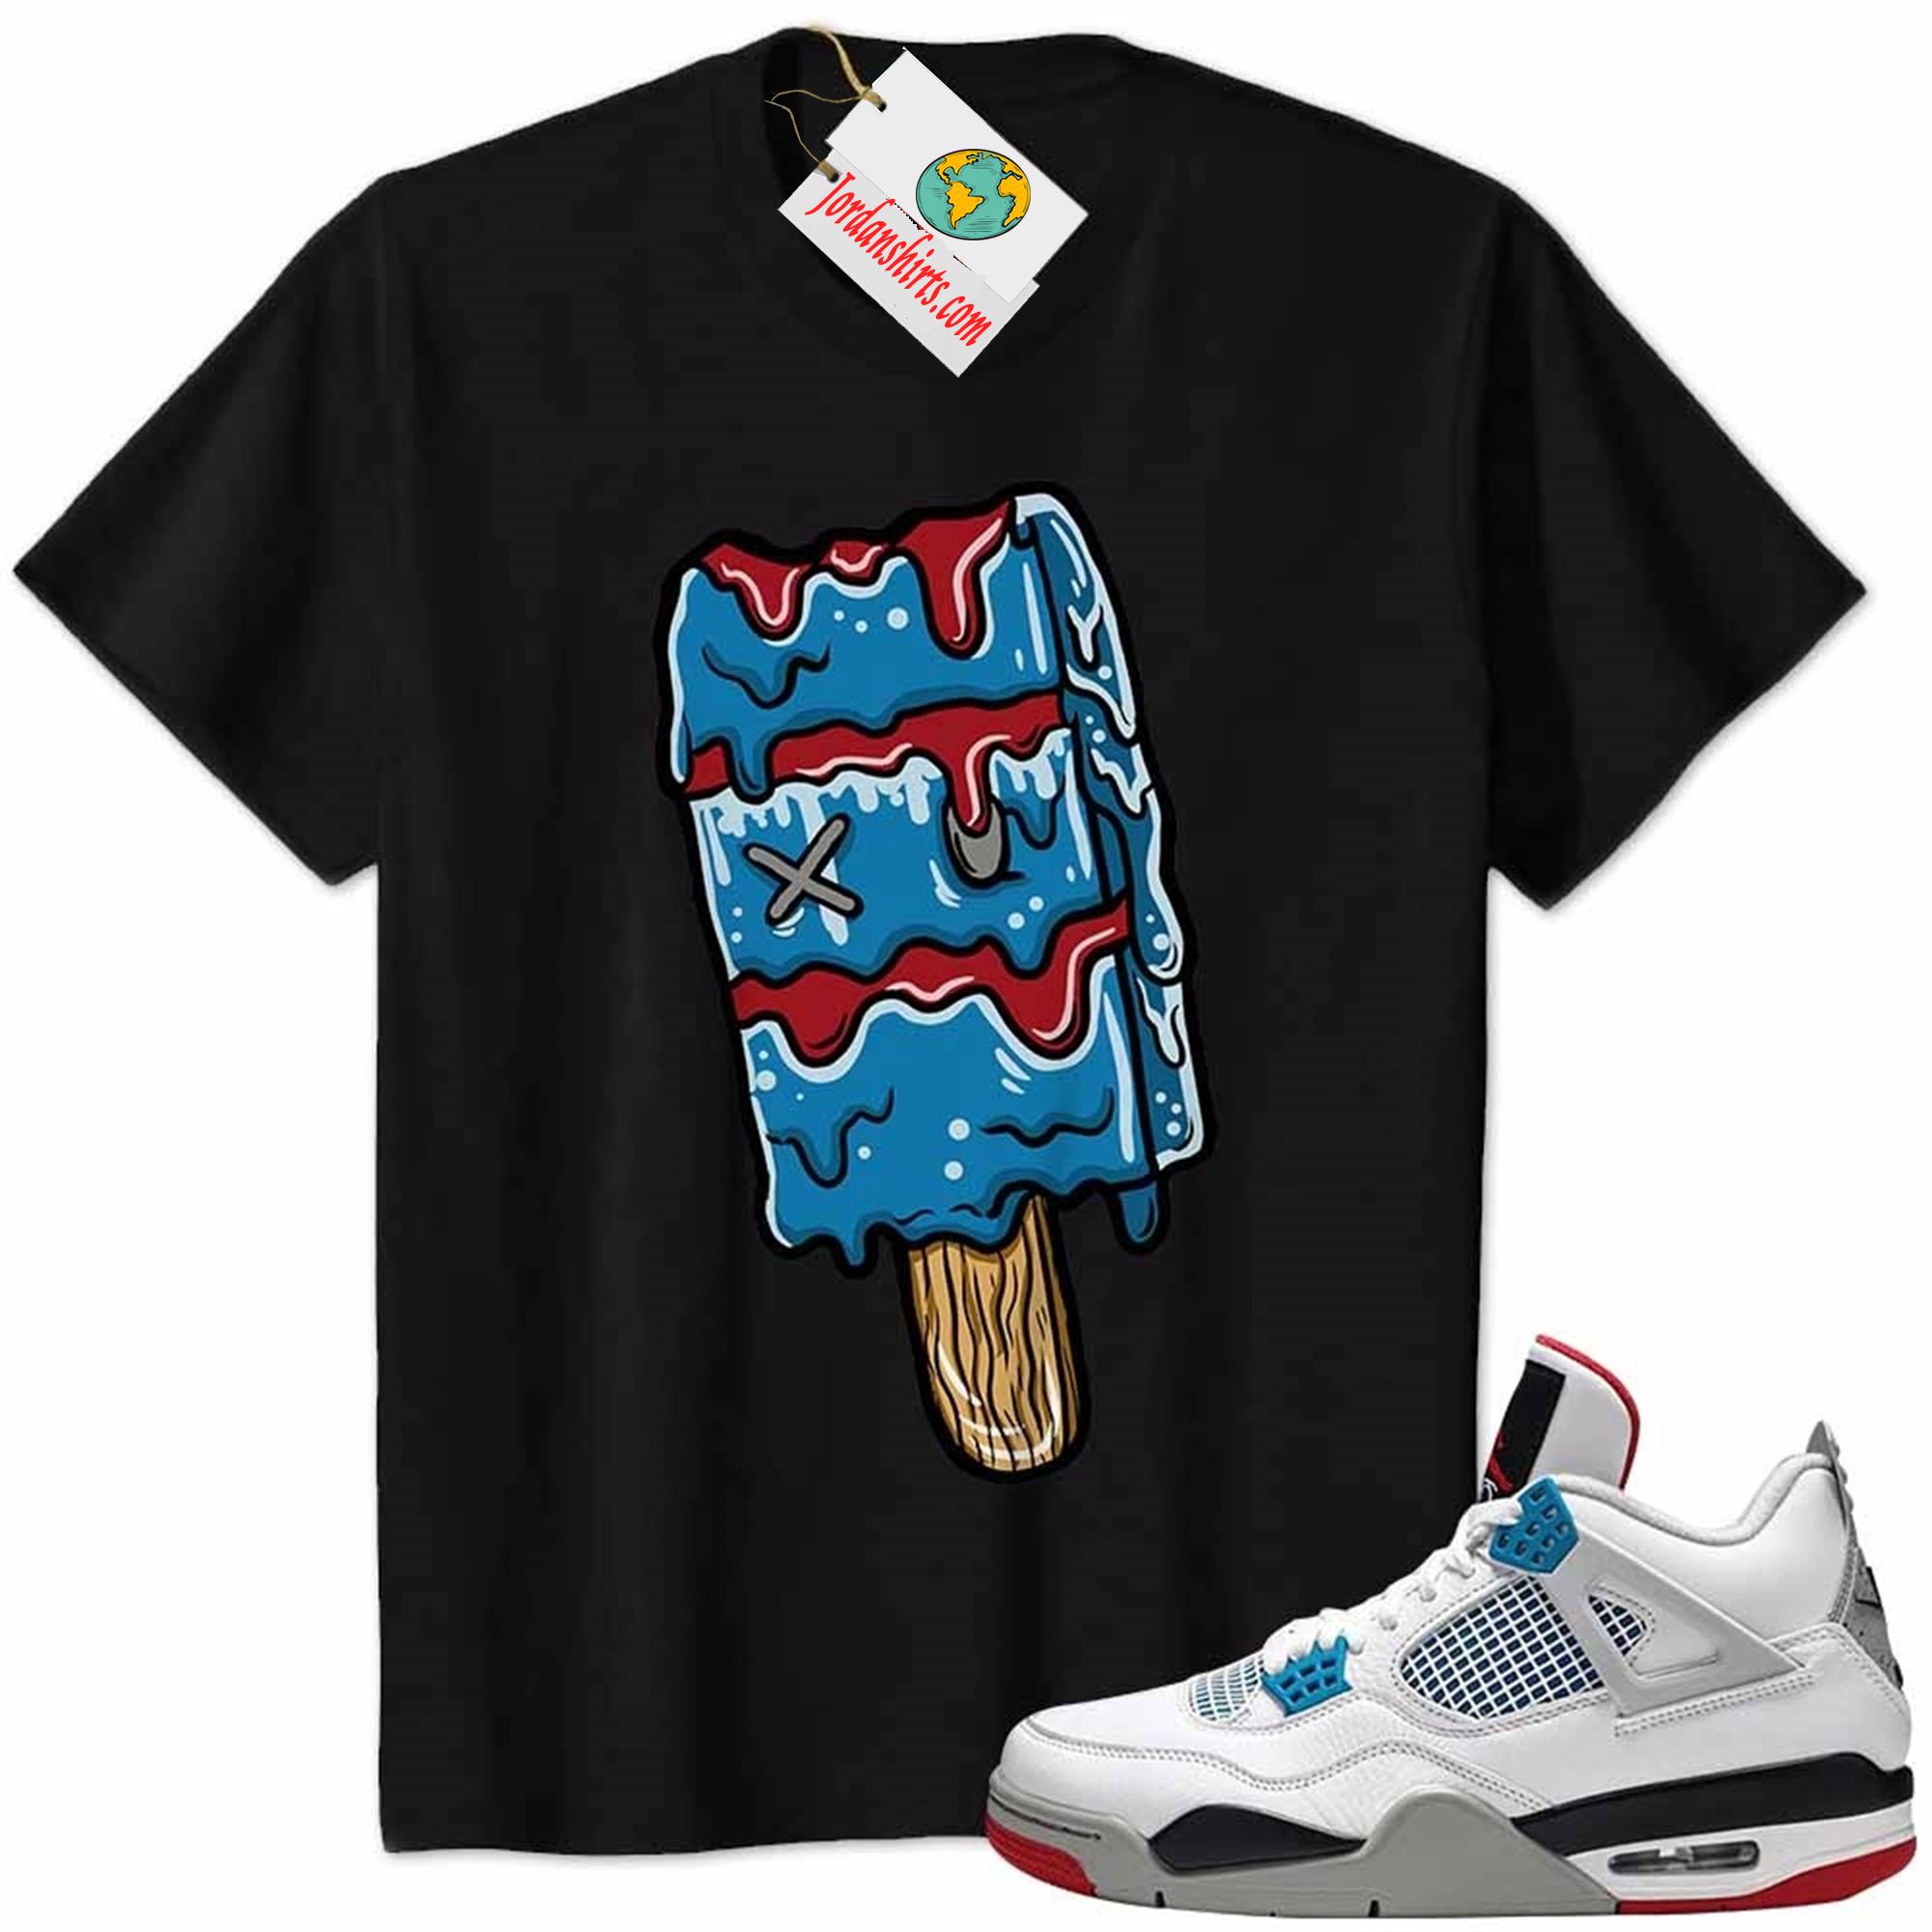 Jordan 4 Shirt, Ice Cream Dripping Black Air Jordan 4 What The 4s Size Up To 5xl